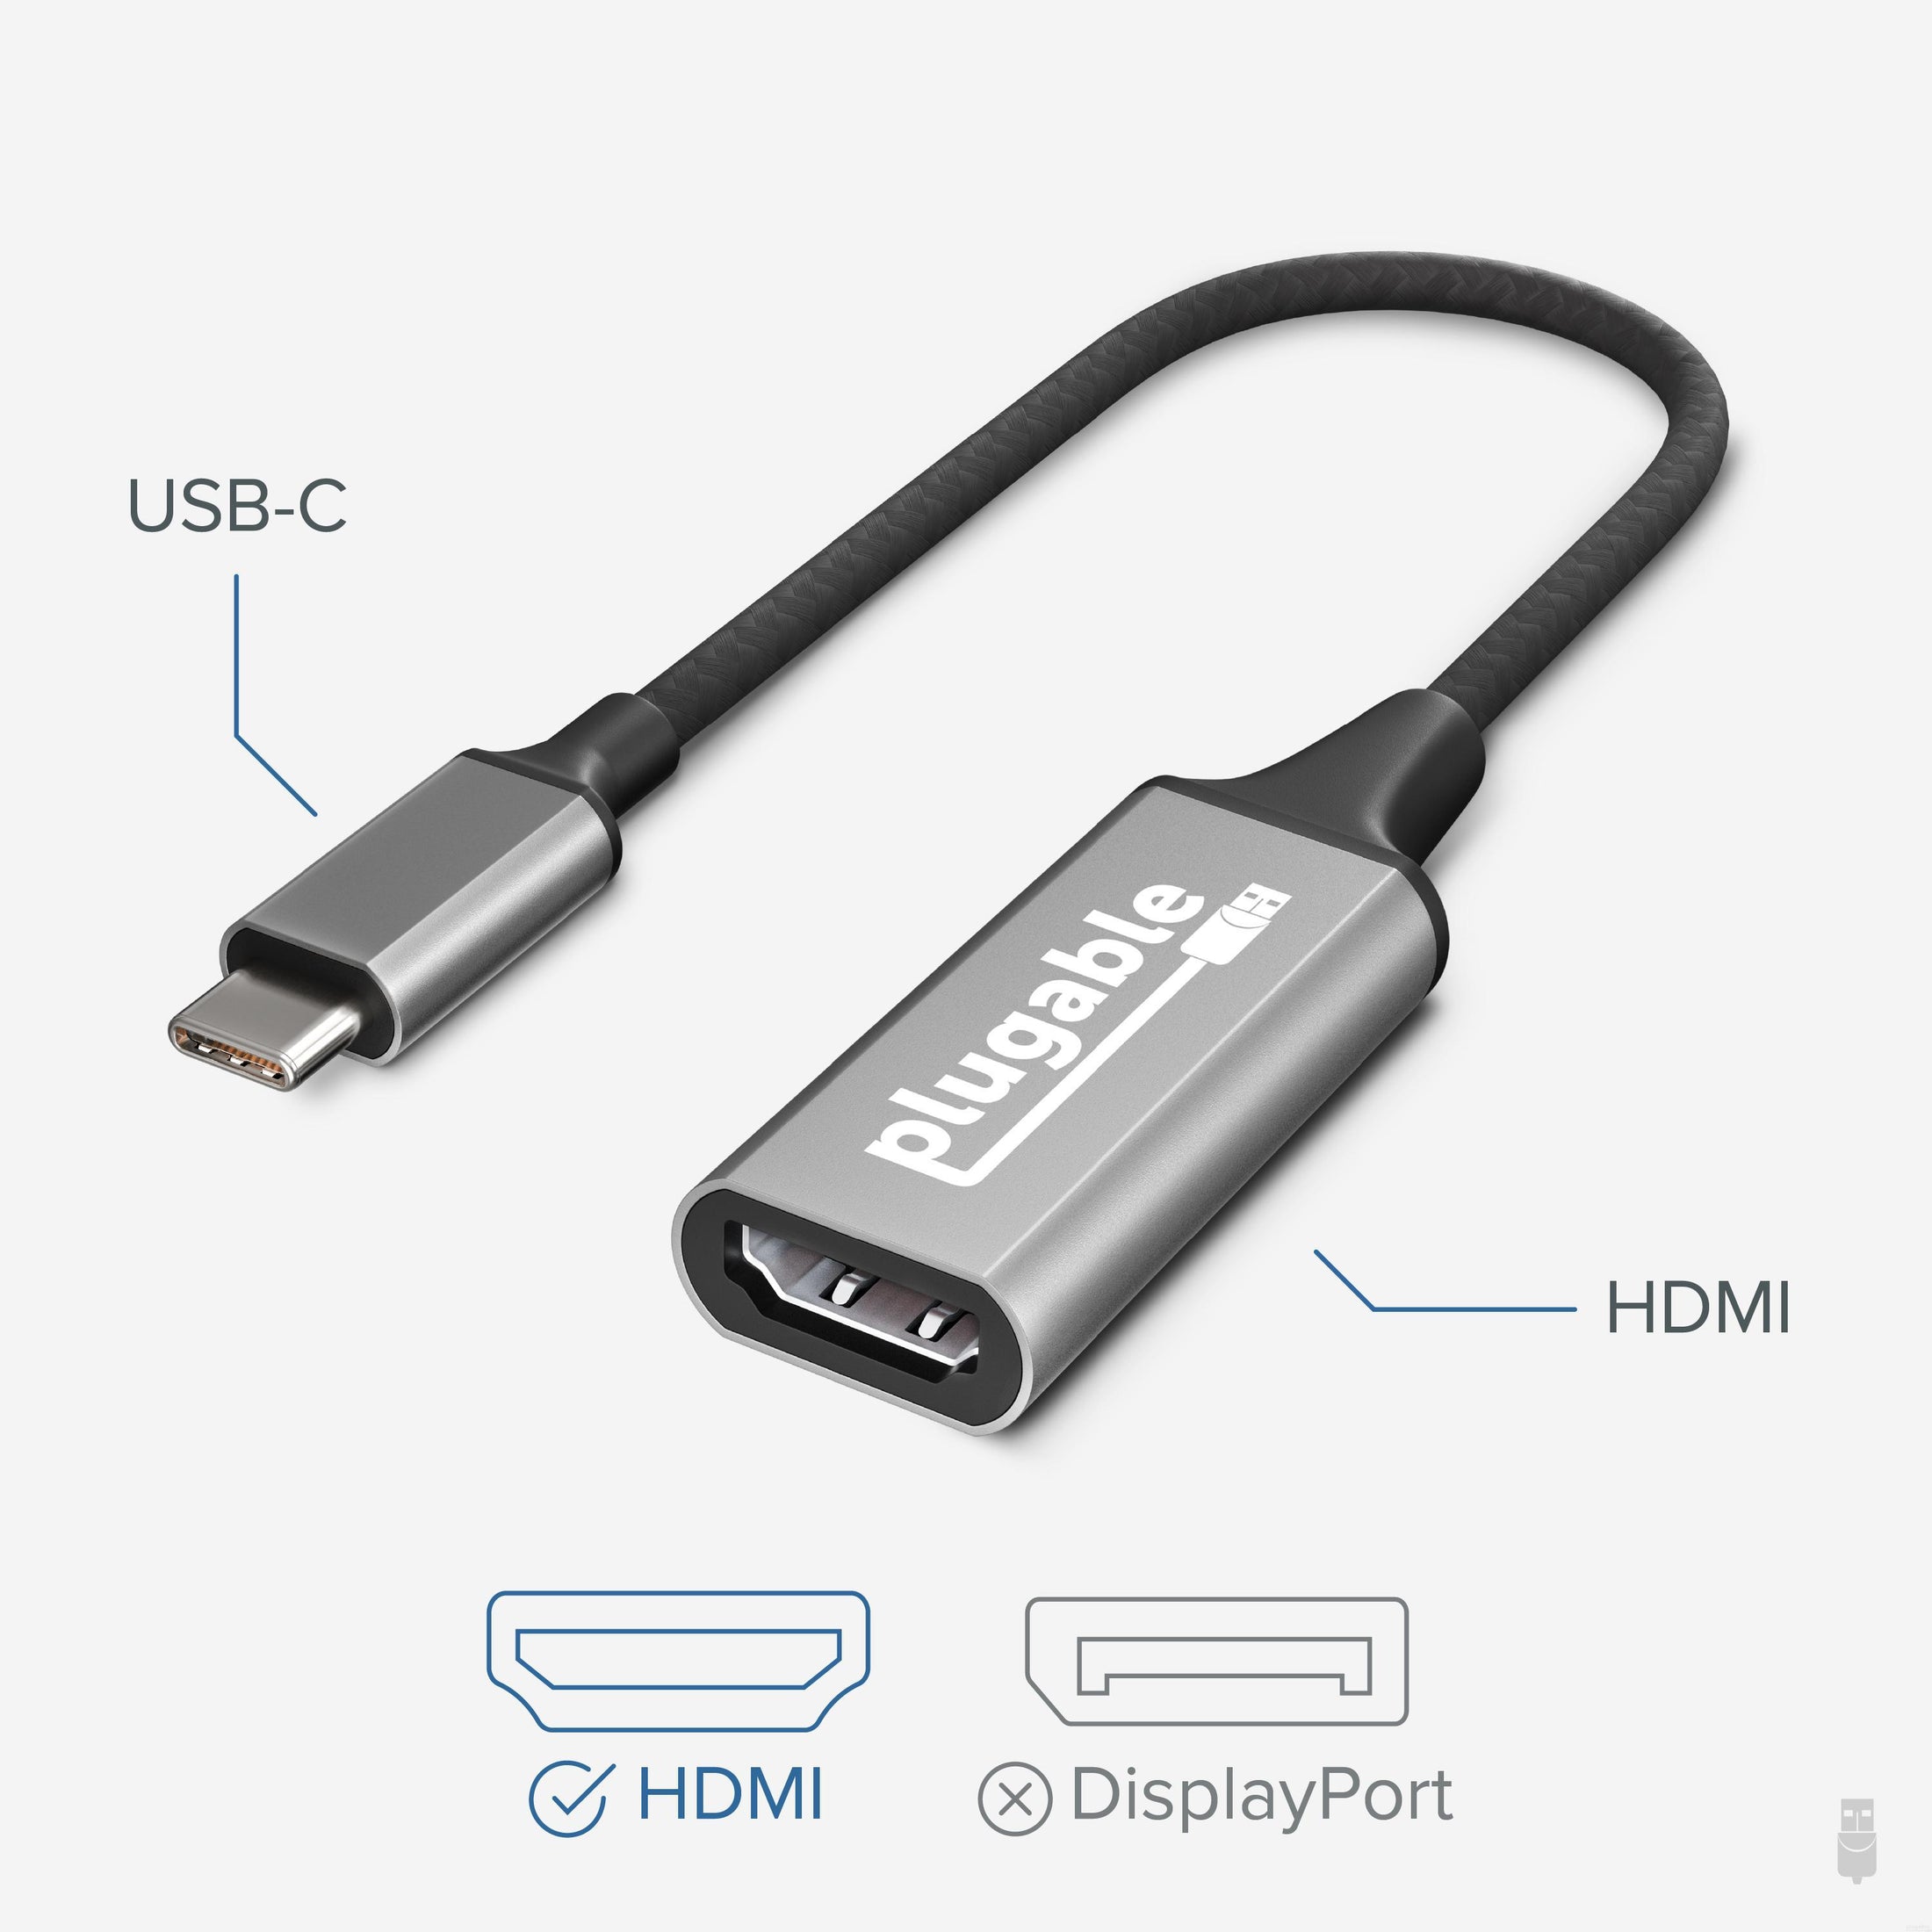 USB 3.1 vs. USB Type C